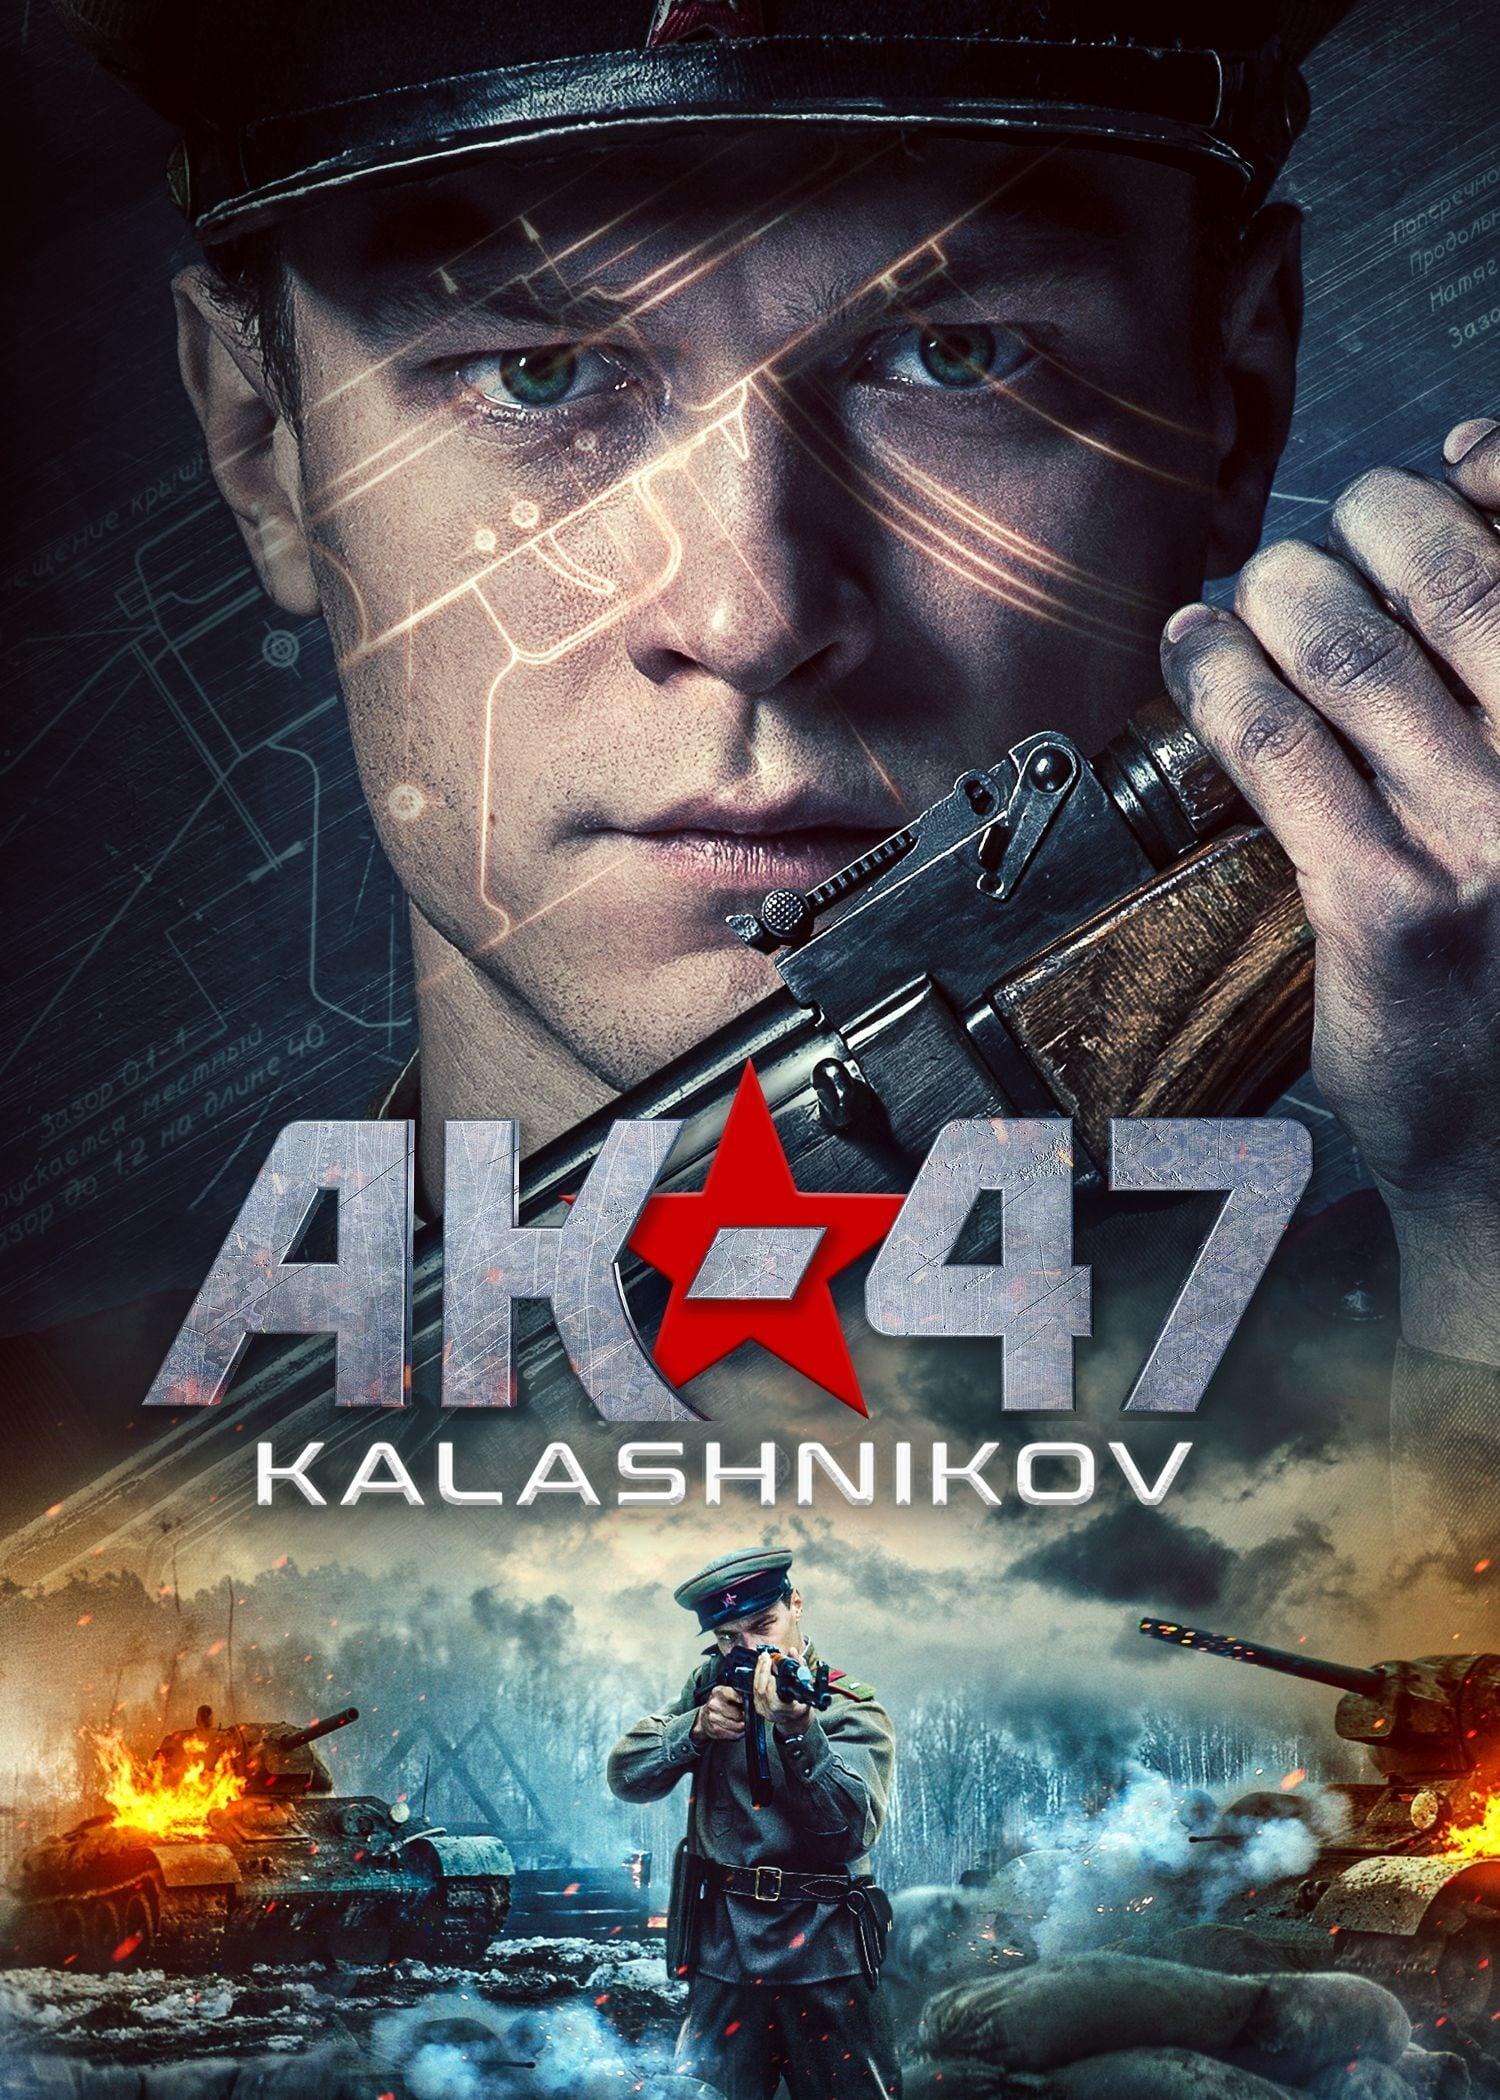 Kalashnikov AK-47 poster